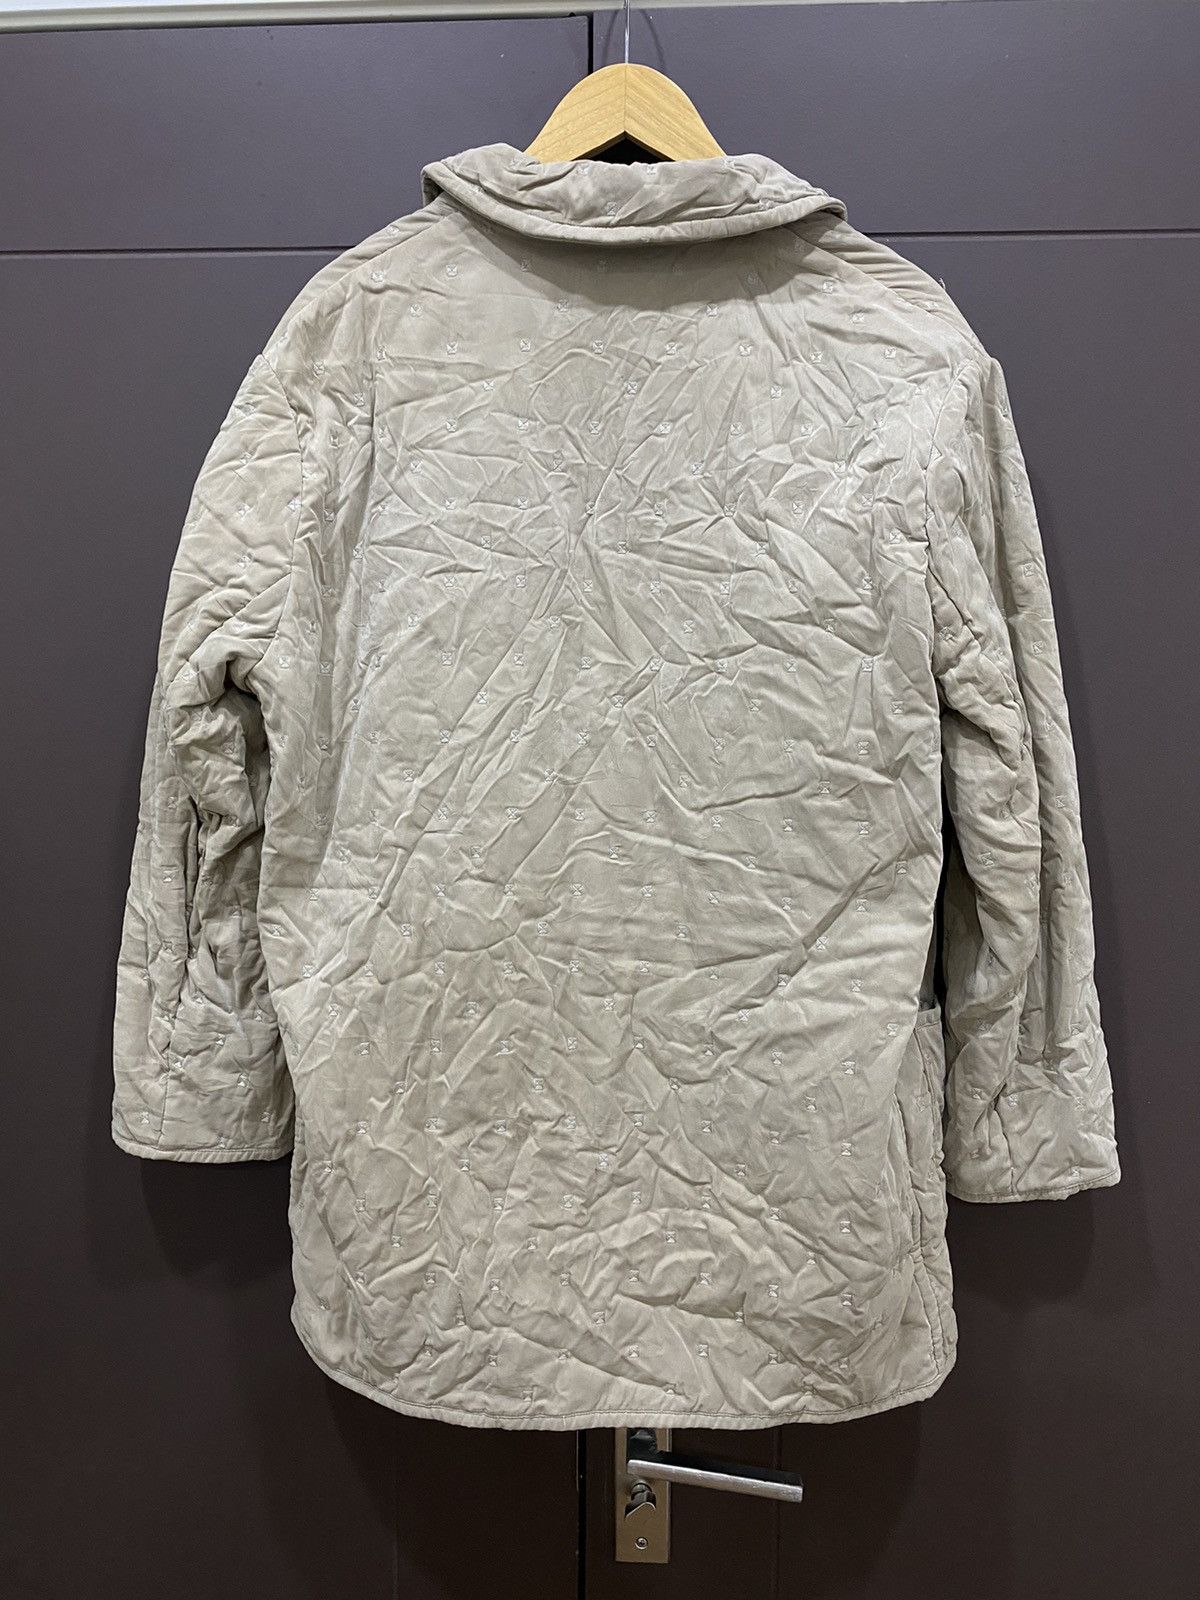 Authentic Hermès Jacket Beige Quilted France 42 Coat - 14